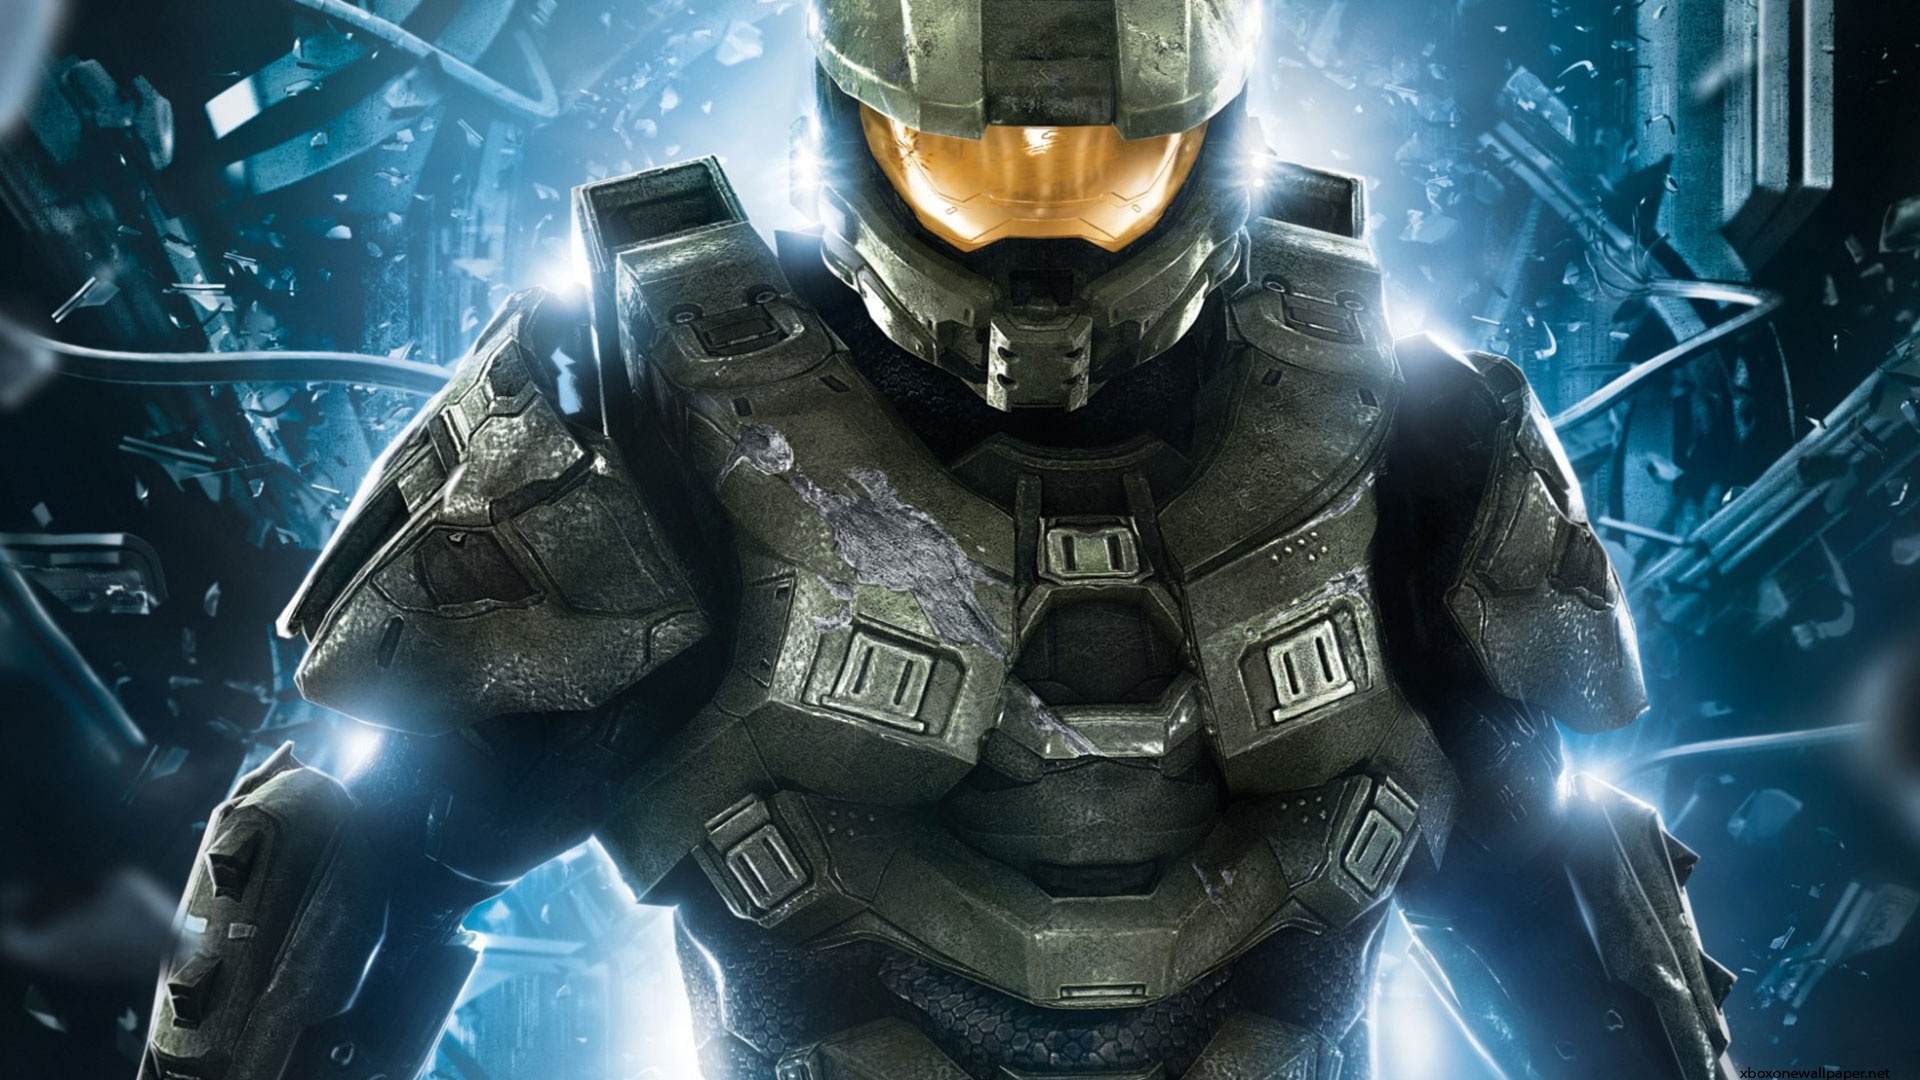 Halo Wallpaper 1080p Xbox One